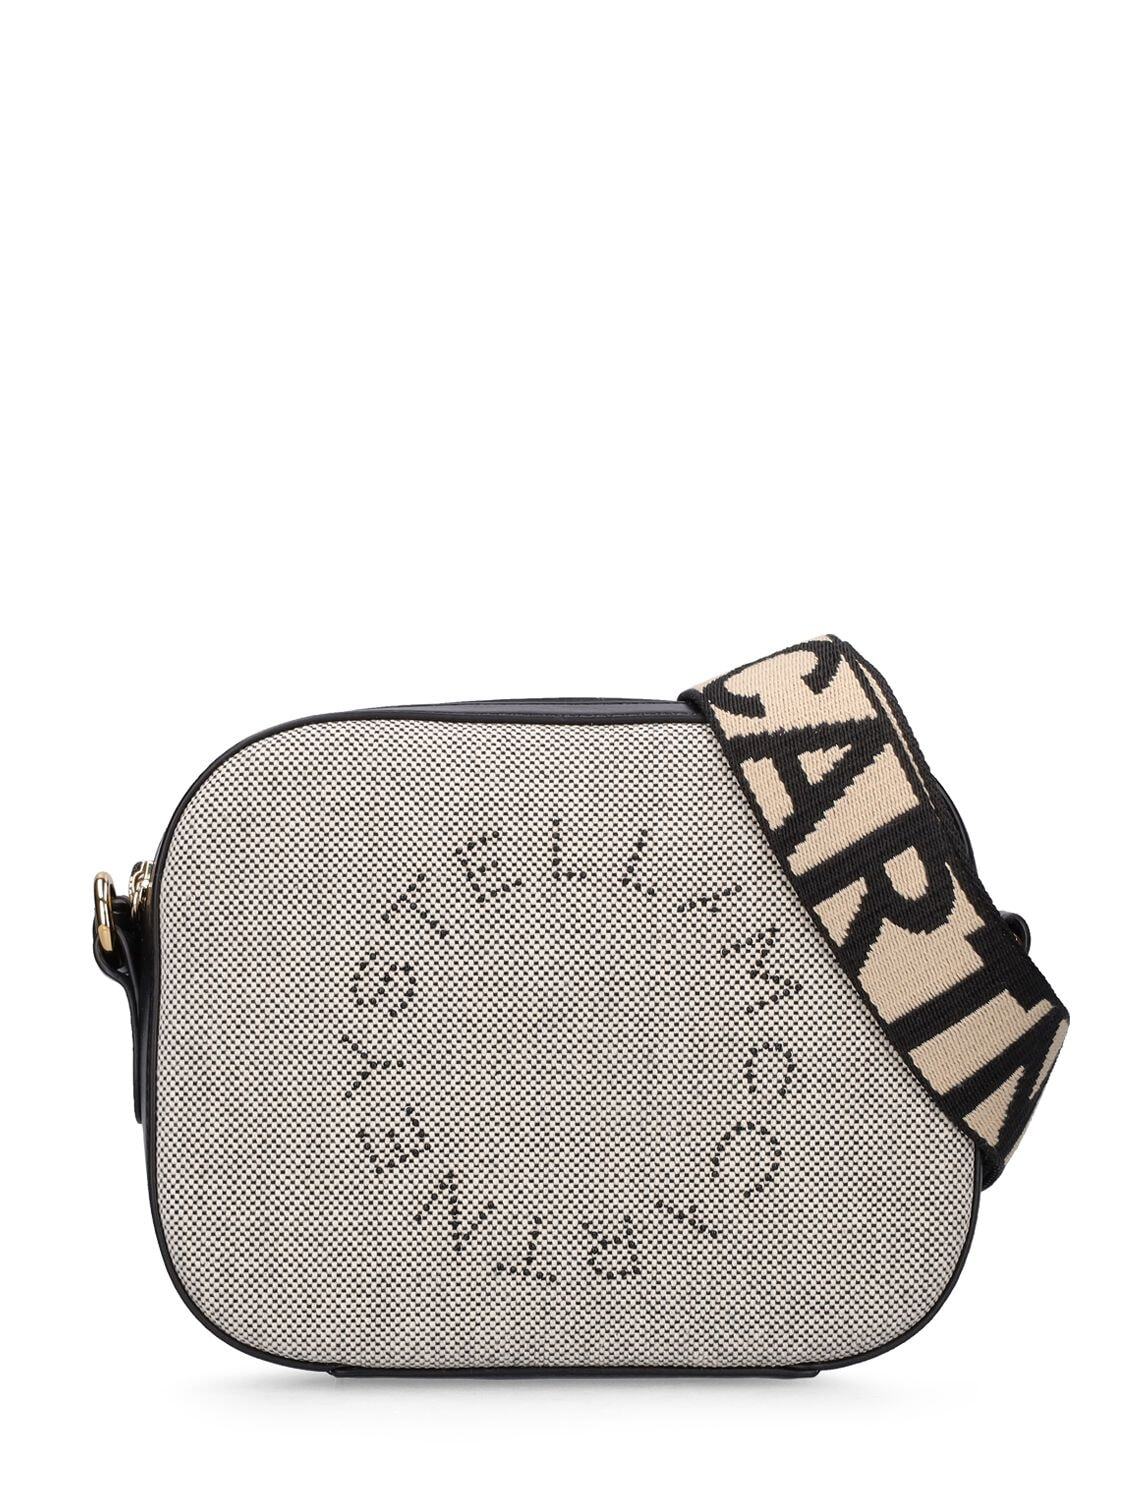 STELLA MCCARTNEY Small Cotton Blend Camera Bag in black / beige